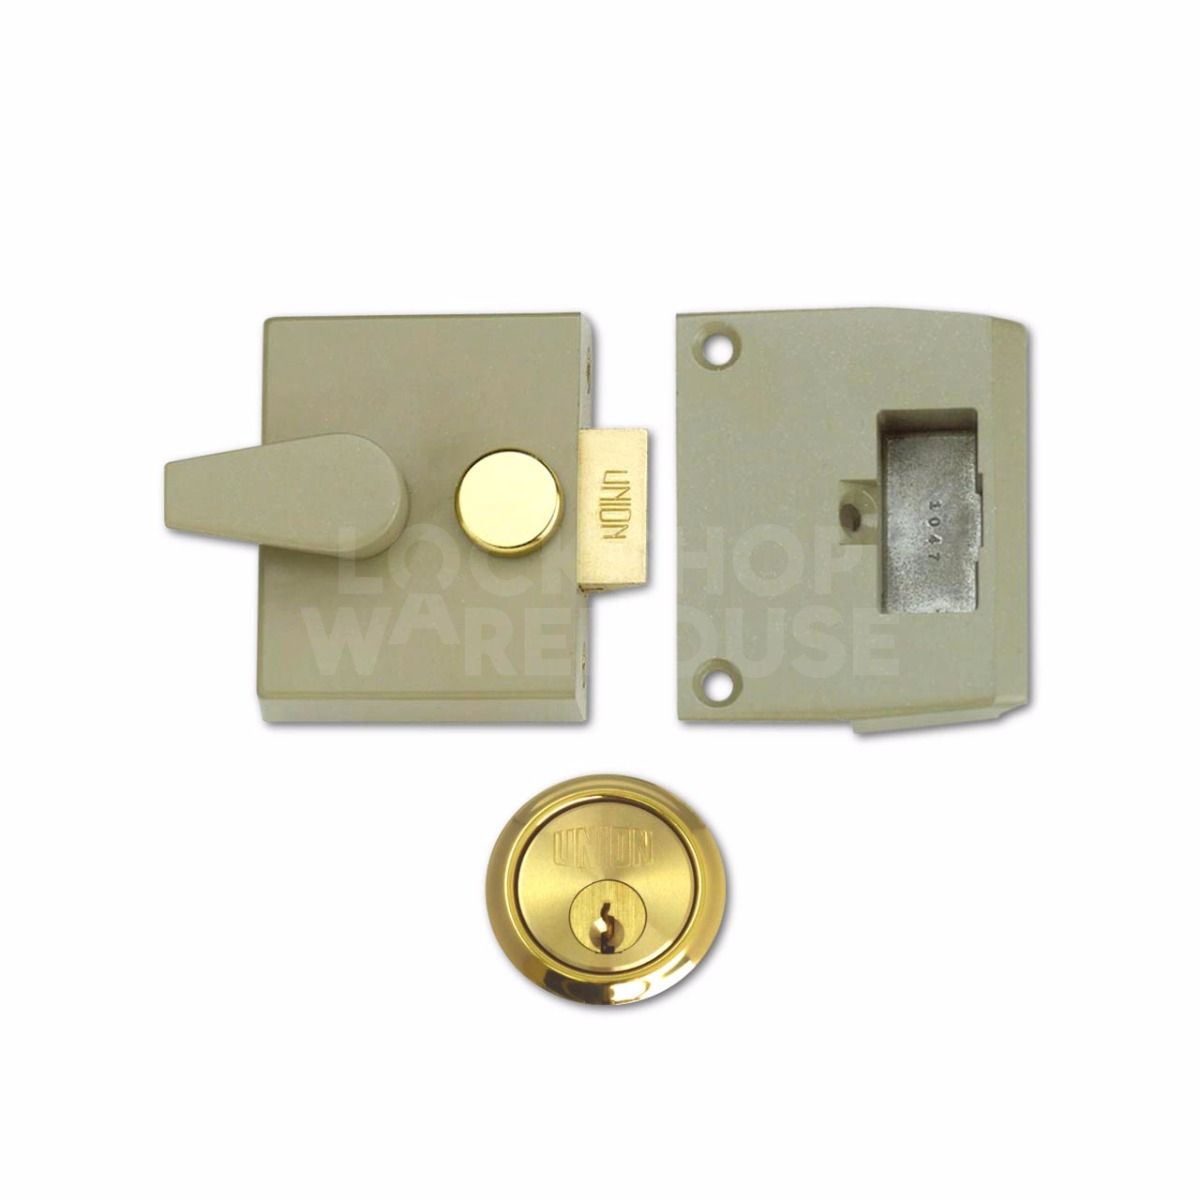 Union 1027 Standard Security Rim Lock 40mm